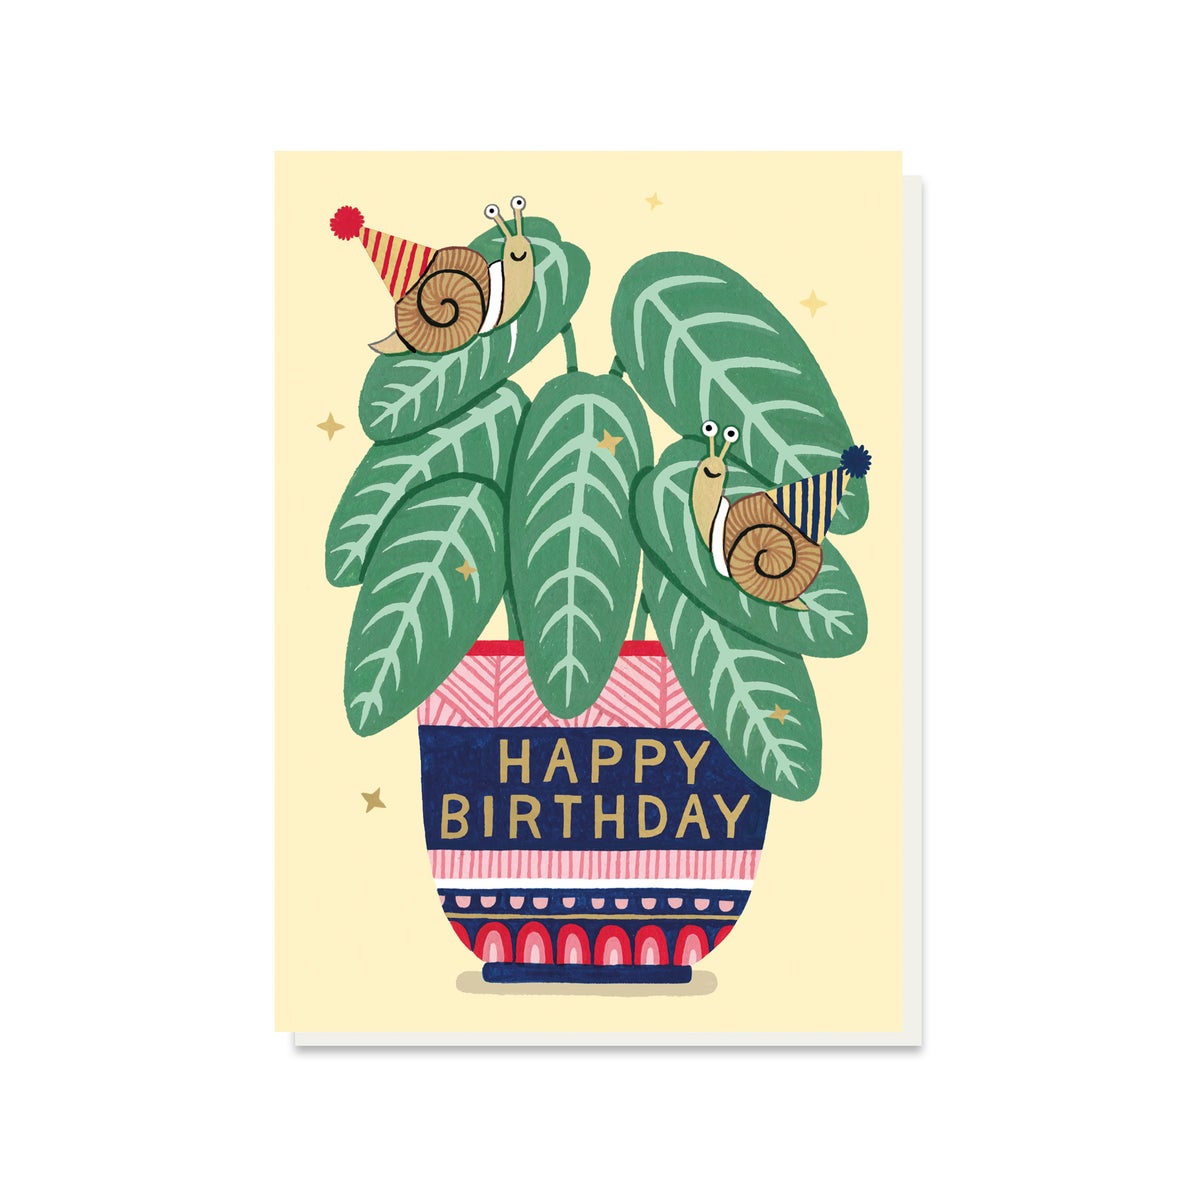 Happy Birthday Snails On Plants Card